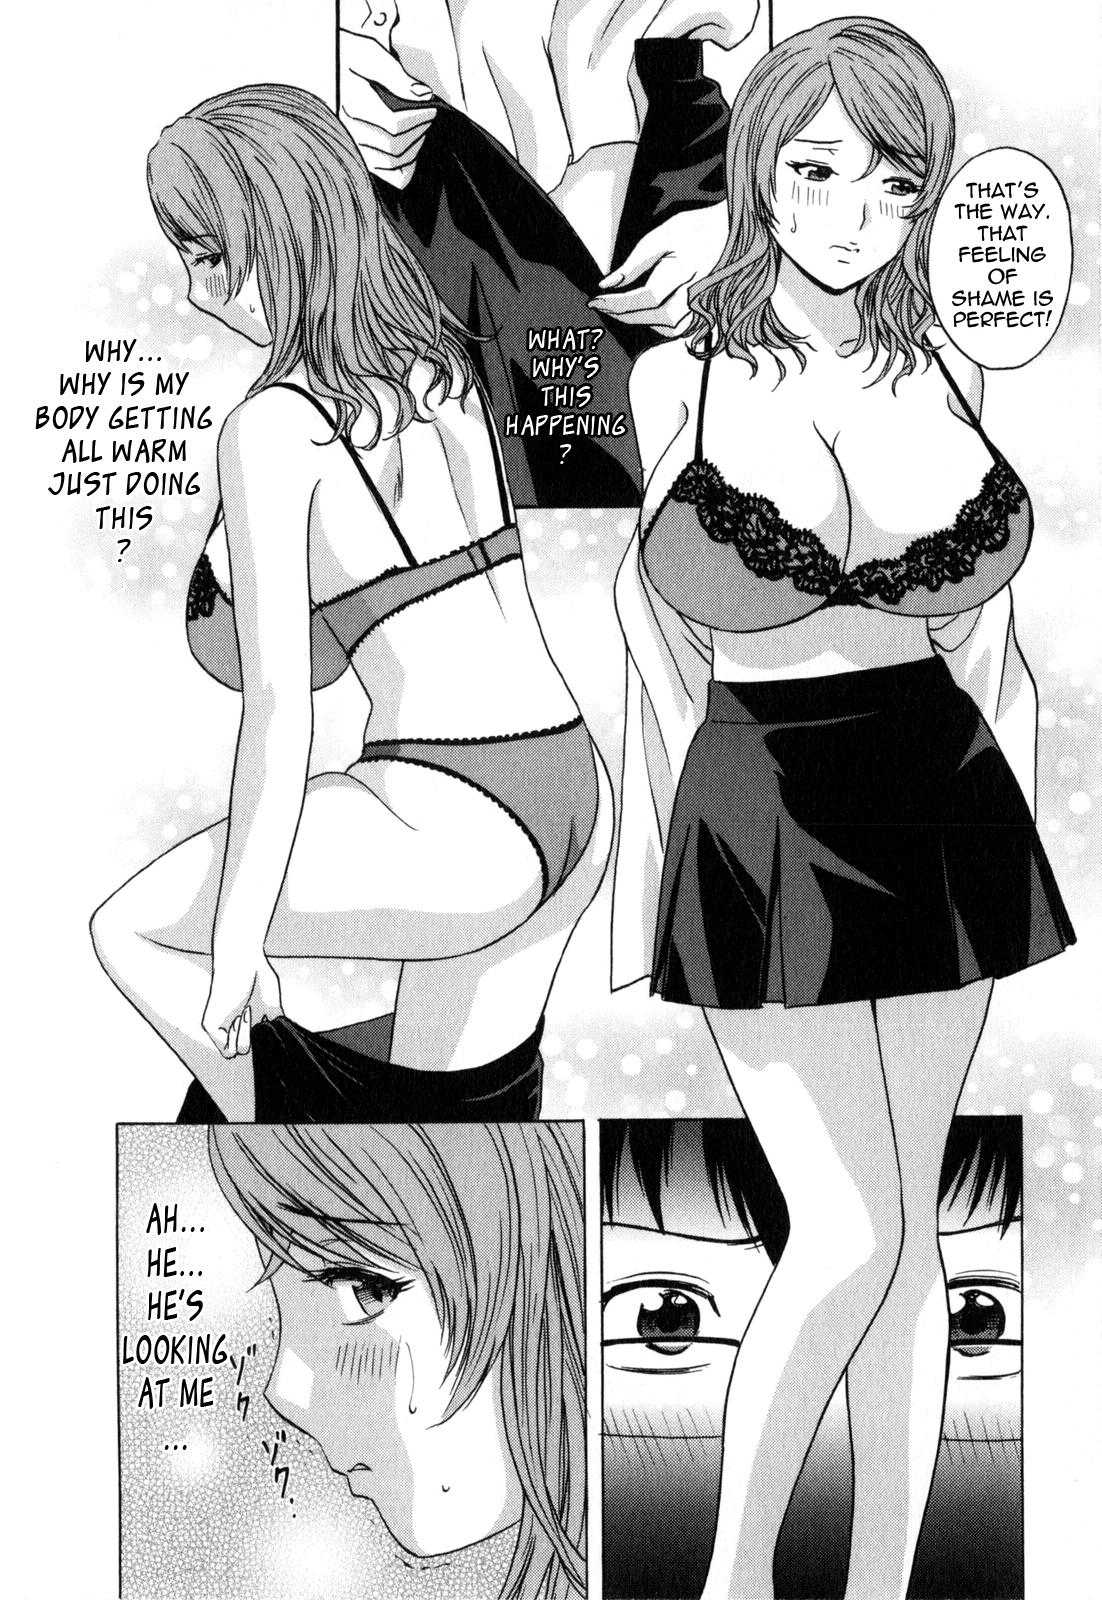 [Hidemaru] Life with Married Women Just Like a Manga 2 - Ch. 1-7 [English] {Tadanohito} 37